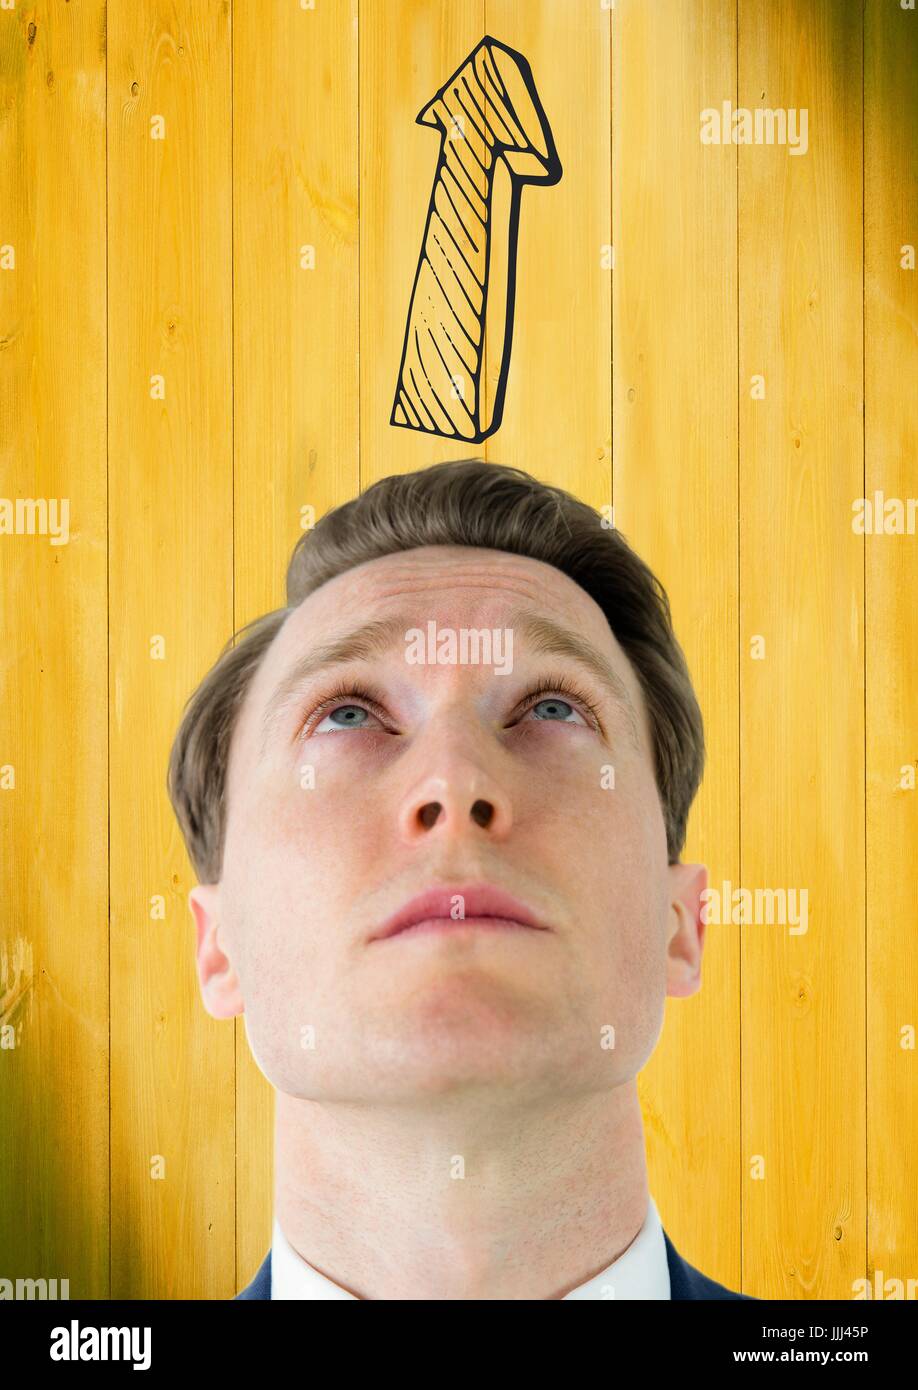 Man looking up at grey upward 3D arrow against yellow wood panel Stock Photo